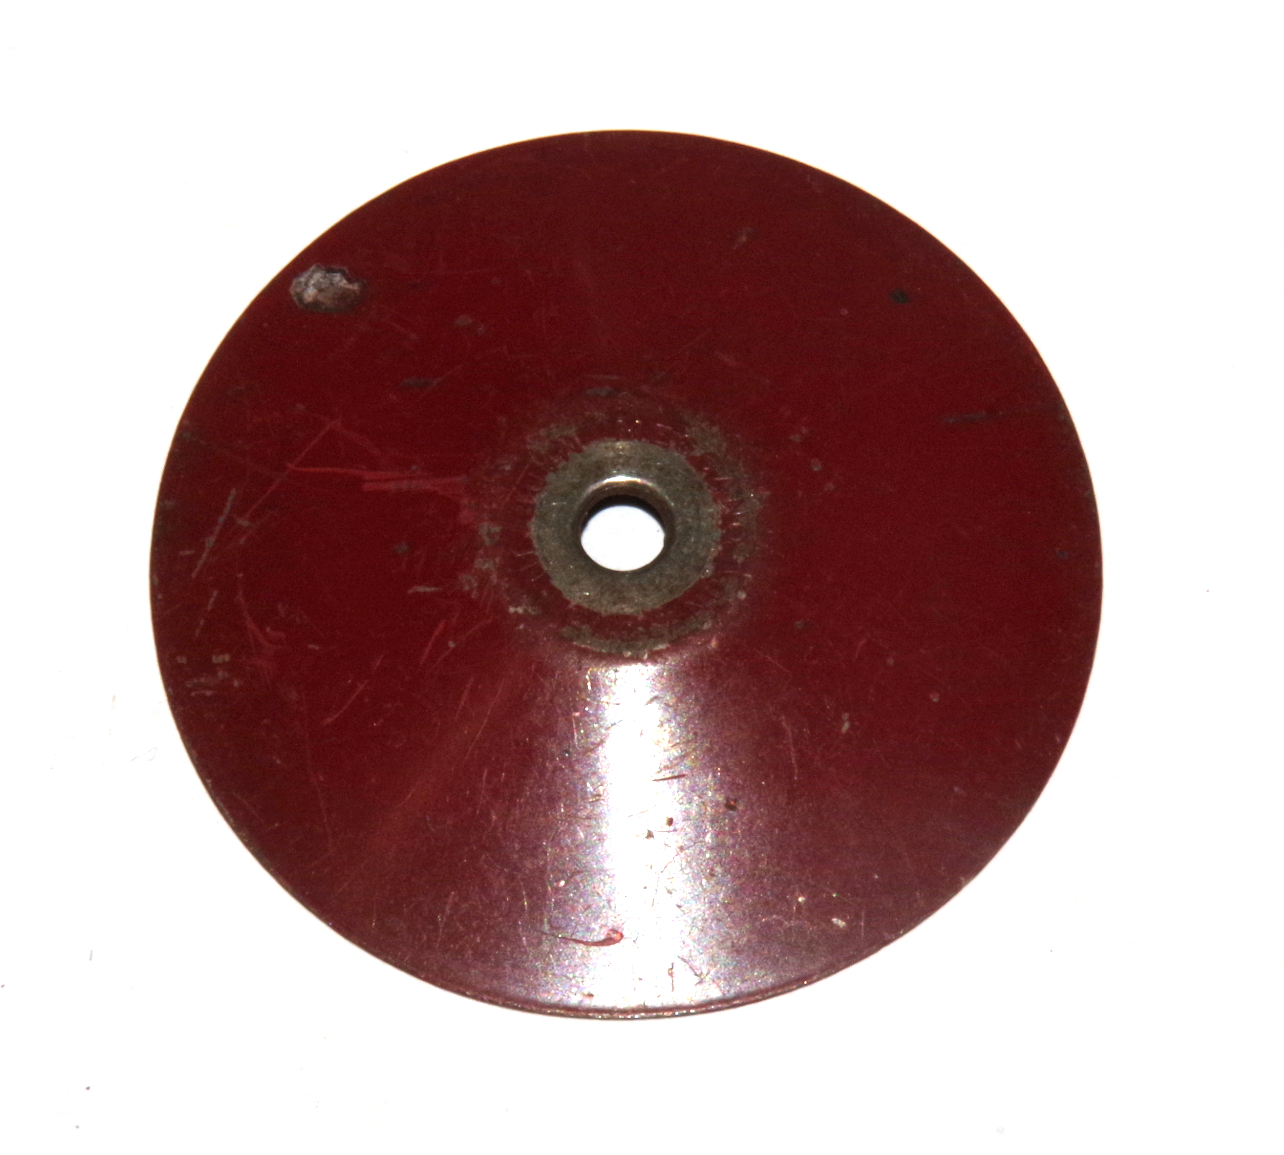 187a Conical Disk Dark Red Original